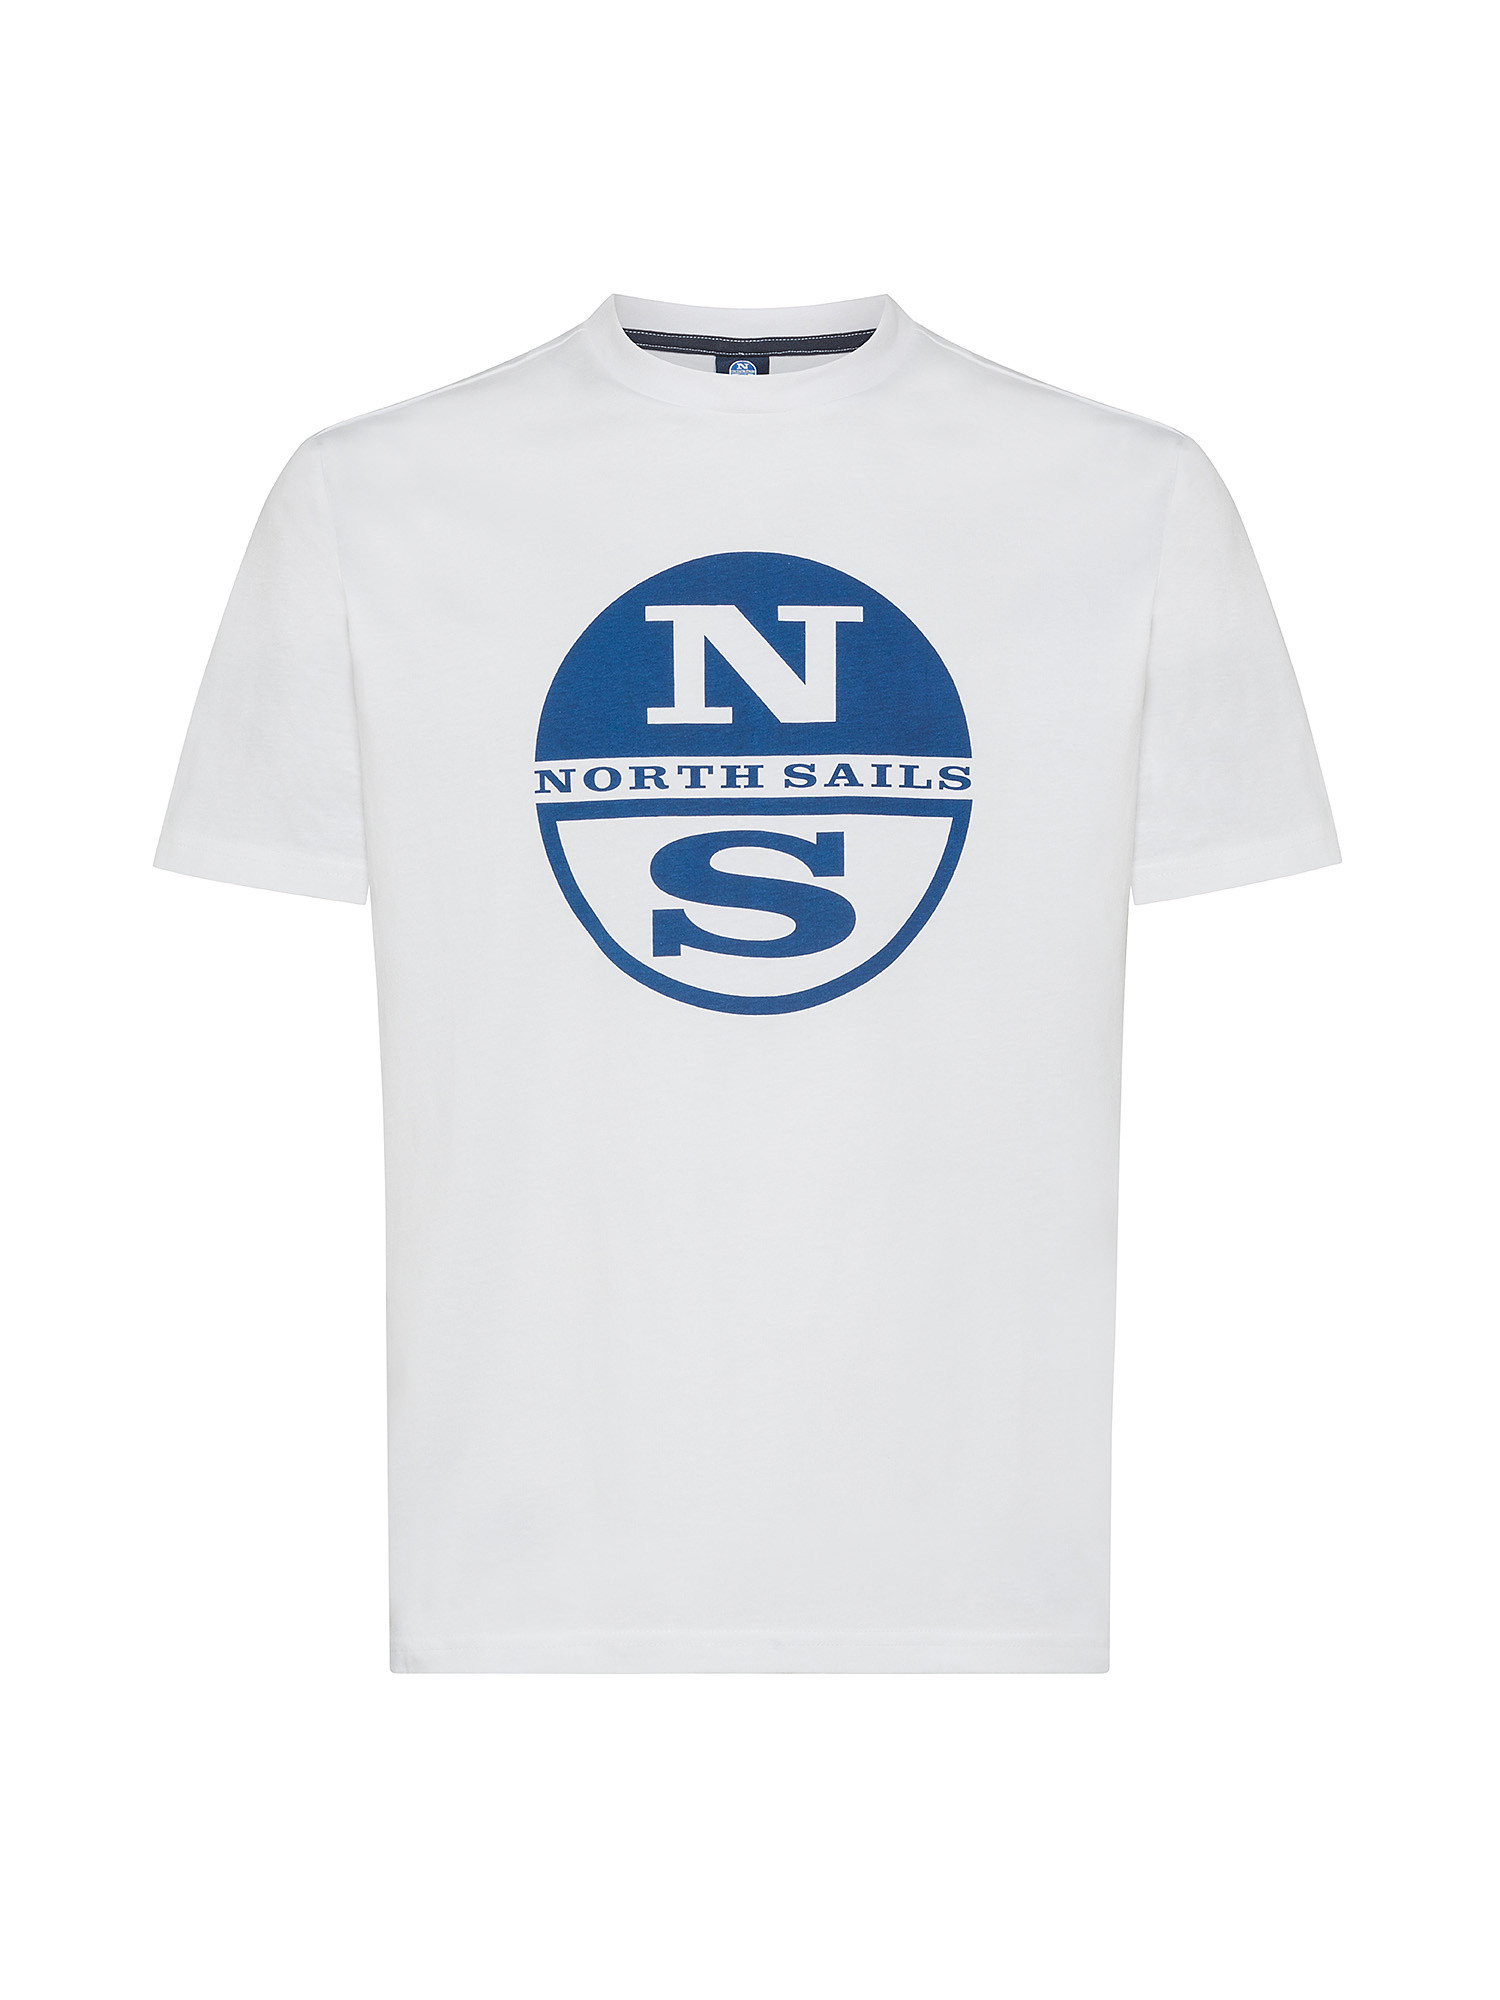 North sails - T-shirt in jersey di cotone organico con maxi logo stampato, Bianco, large image number 0